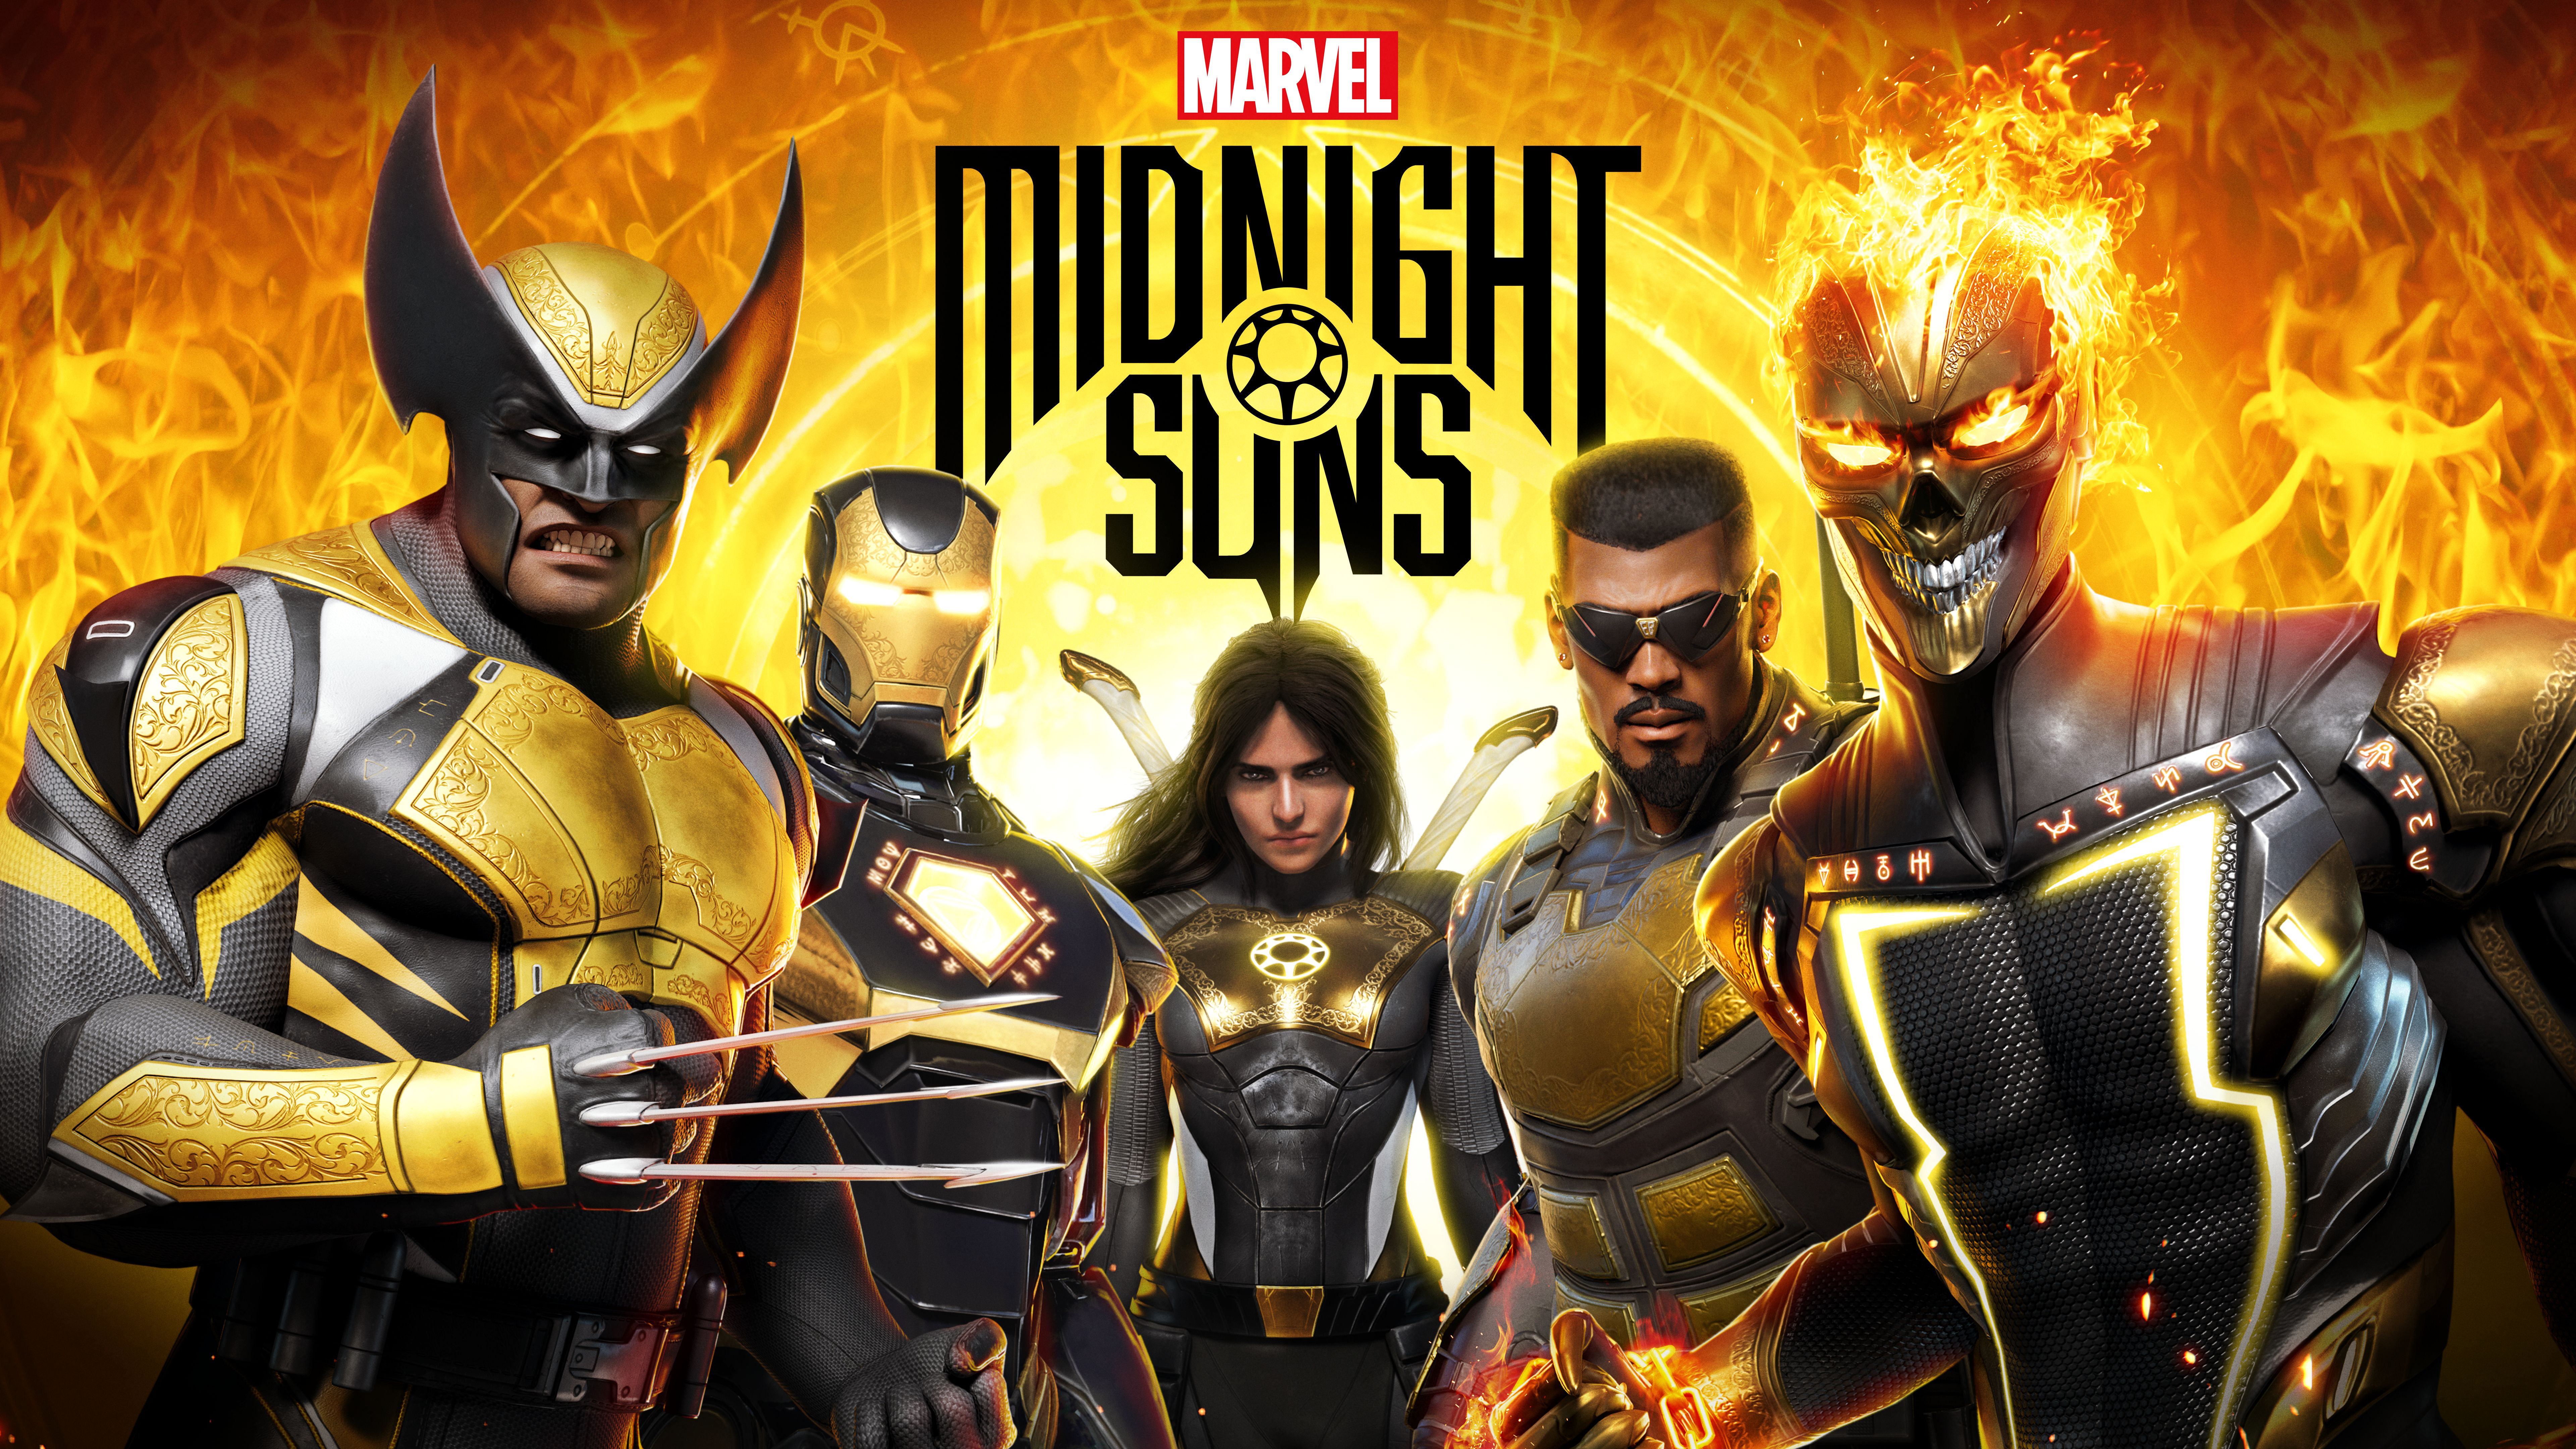 Marvel_s Midnight Suns - Key Art Horizontal